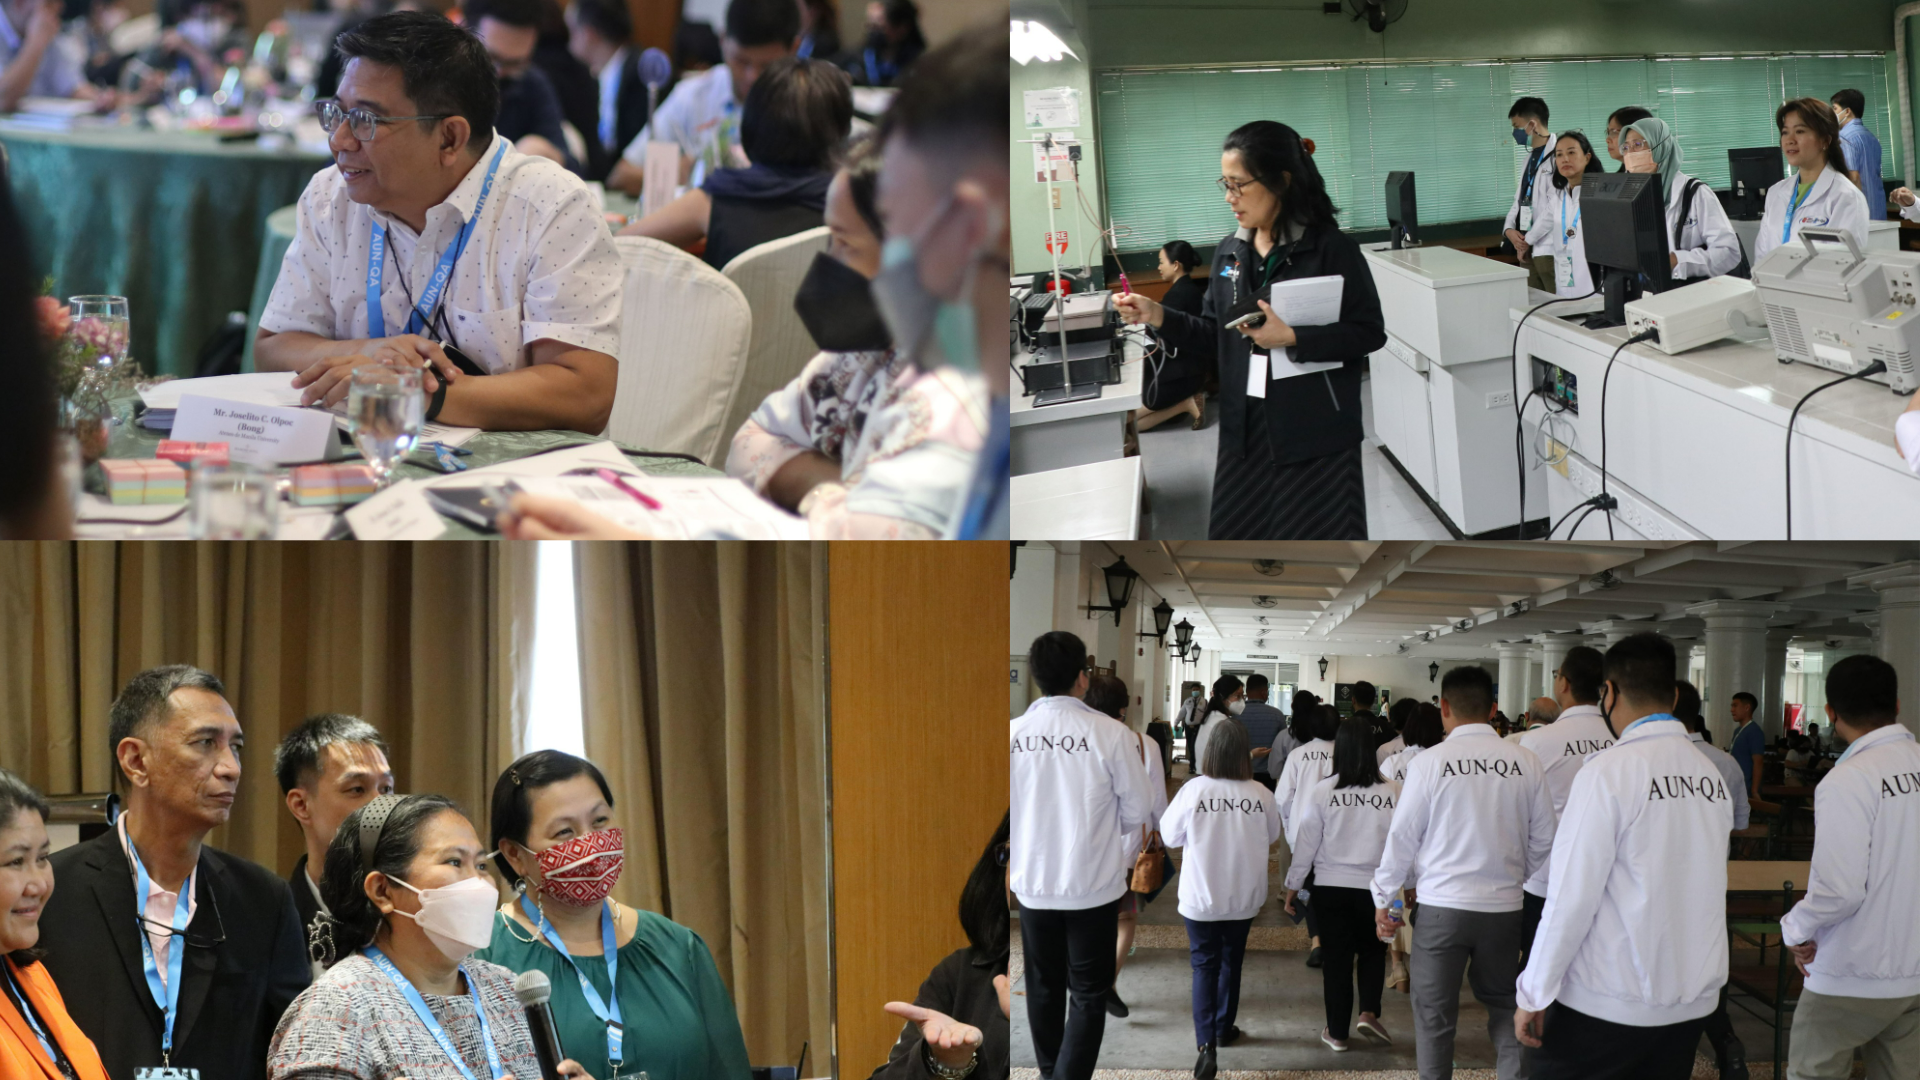 The 12th Assessor Training Workshop for AUN-QA Programme Assessment and the 244th AUN-QA Programme Assessment at De La Salle University, the Philippines